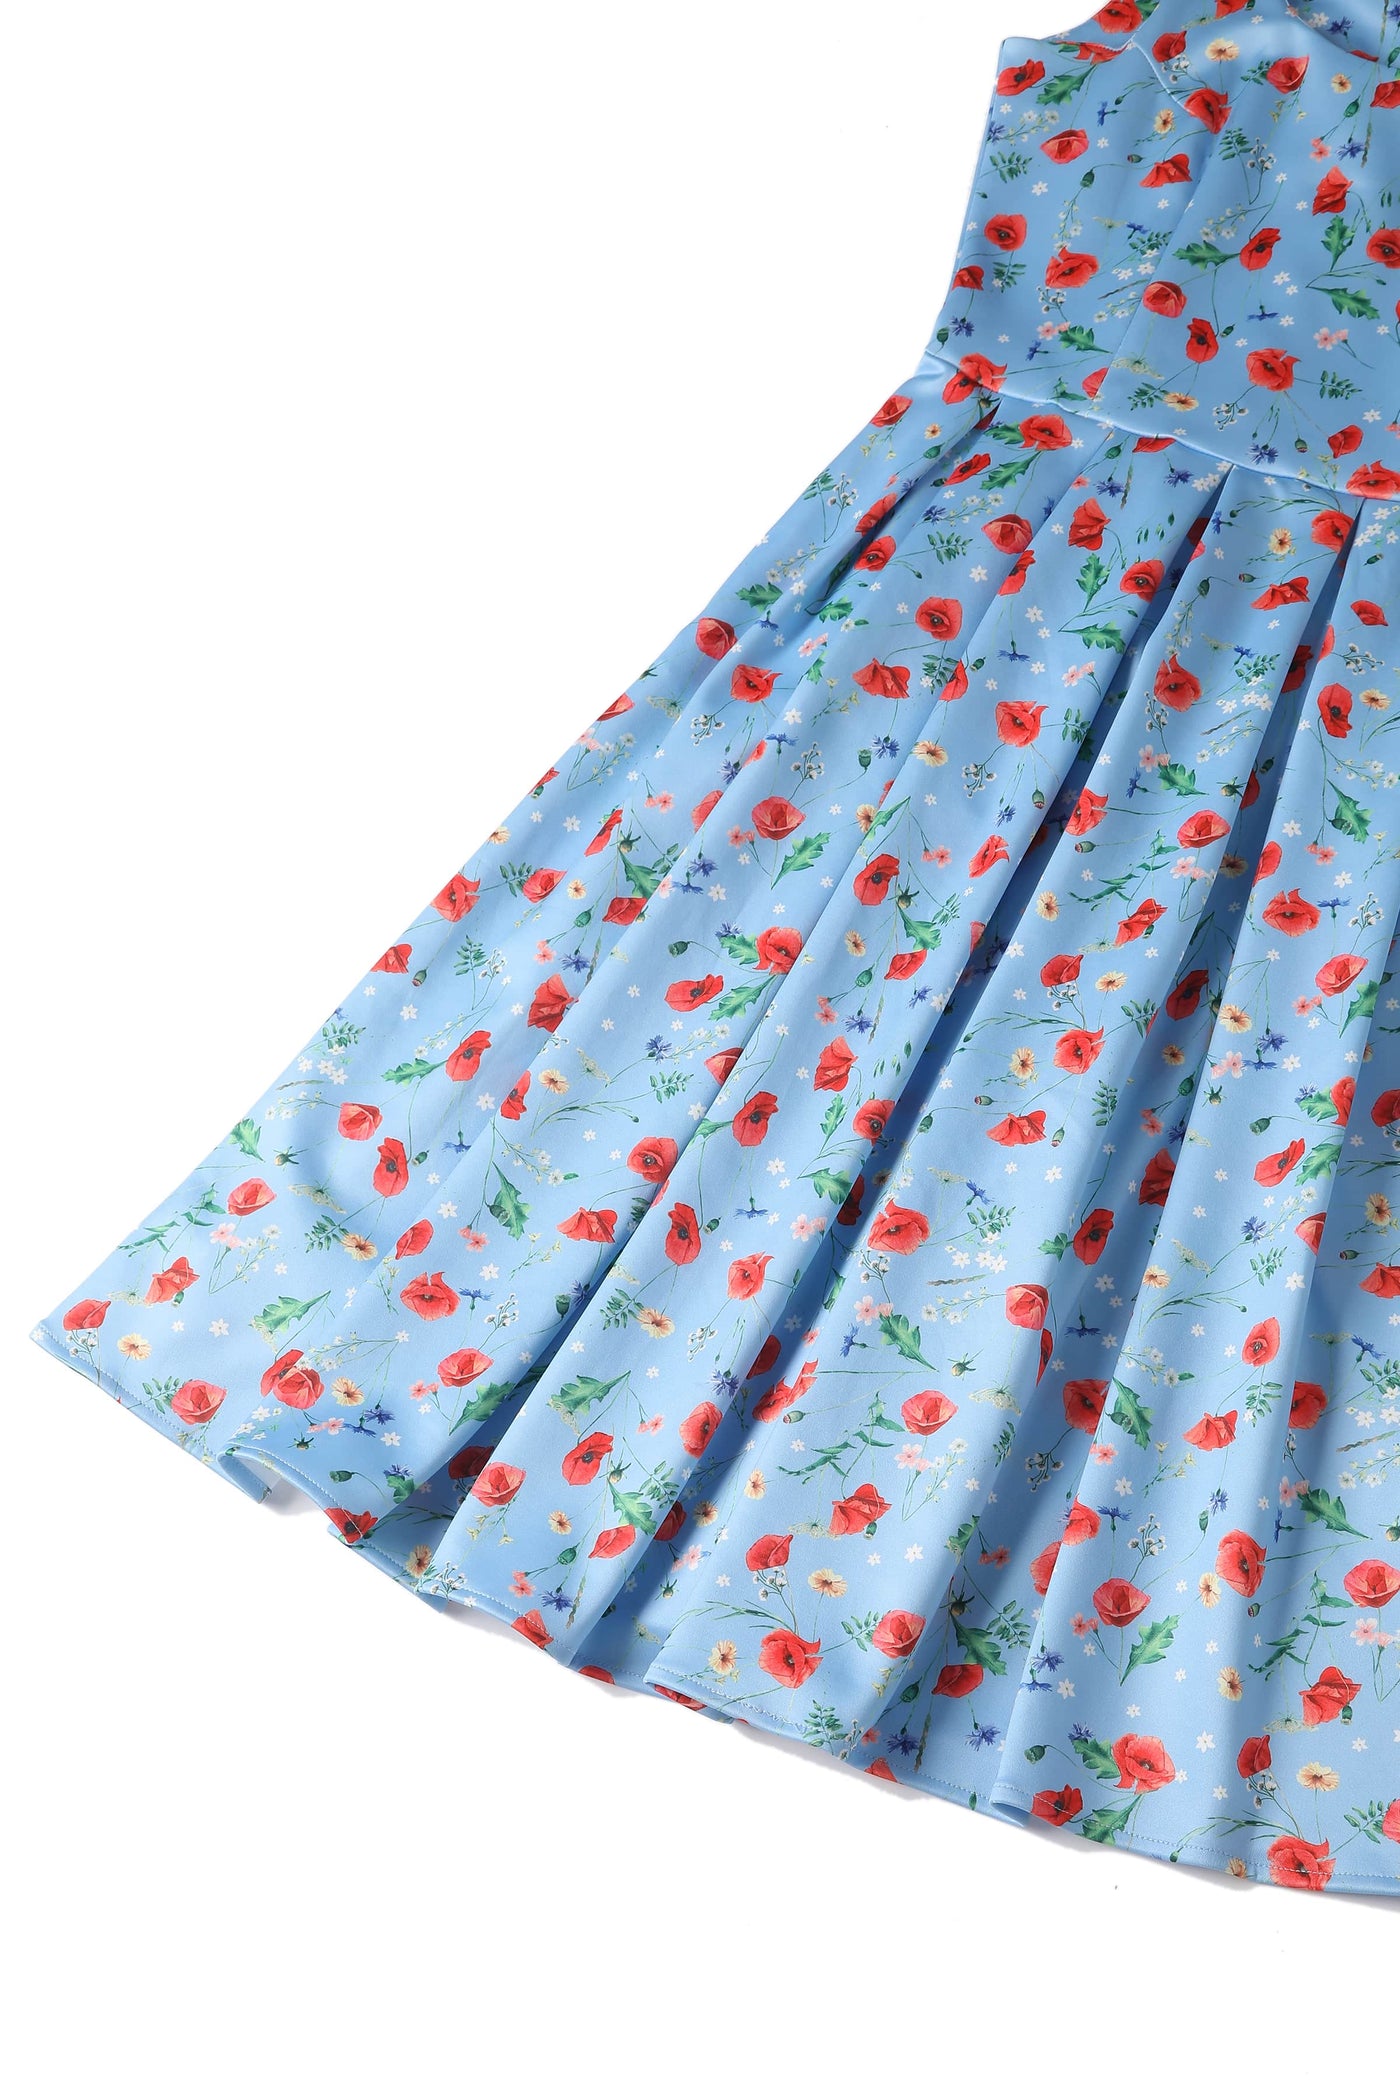  amanda light blue poppy floral swing dress skirt close up